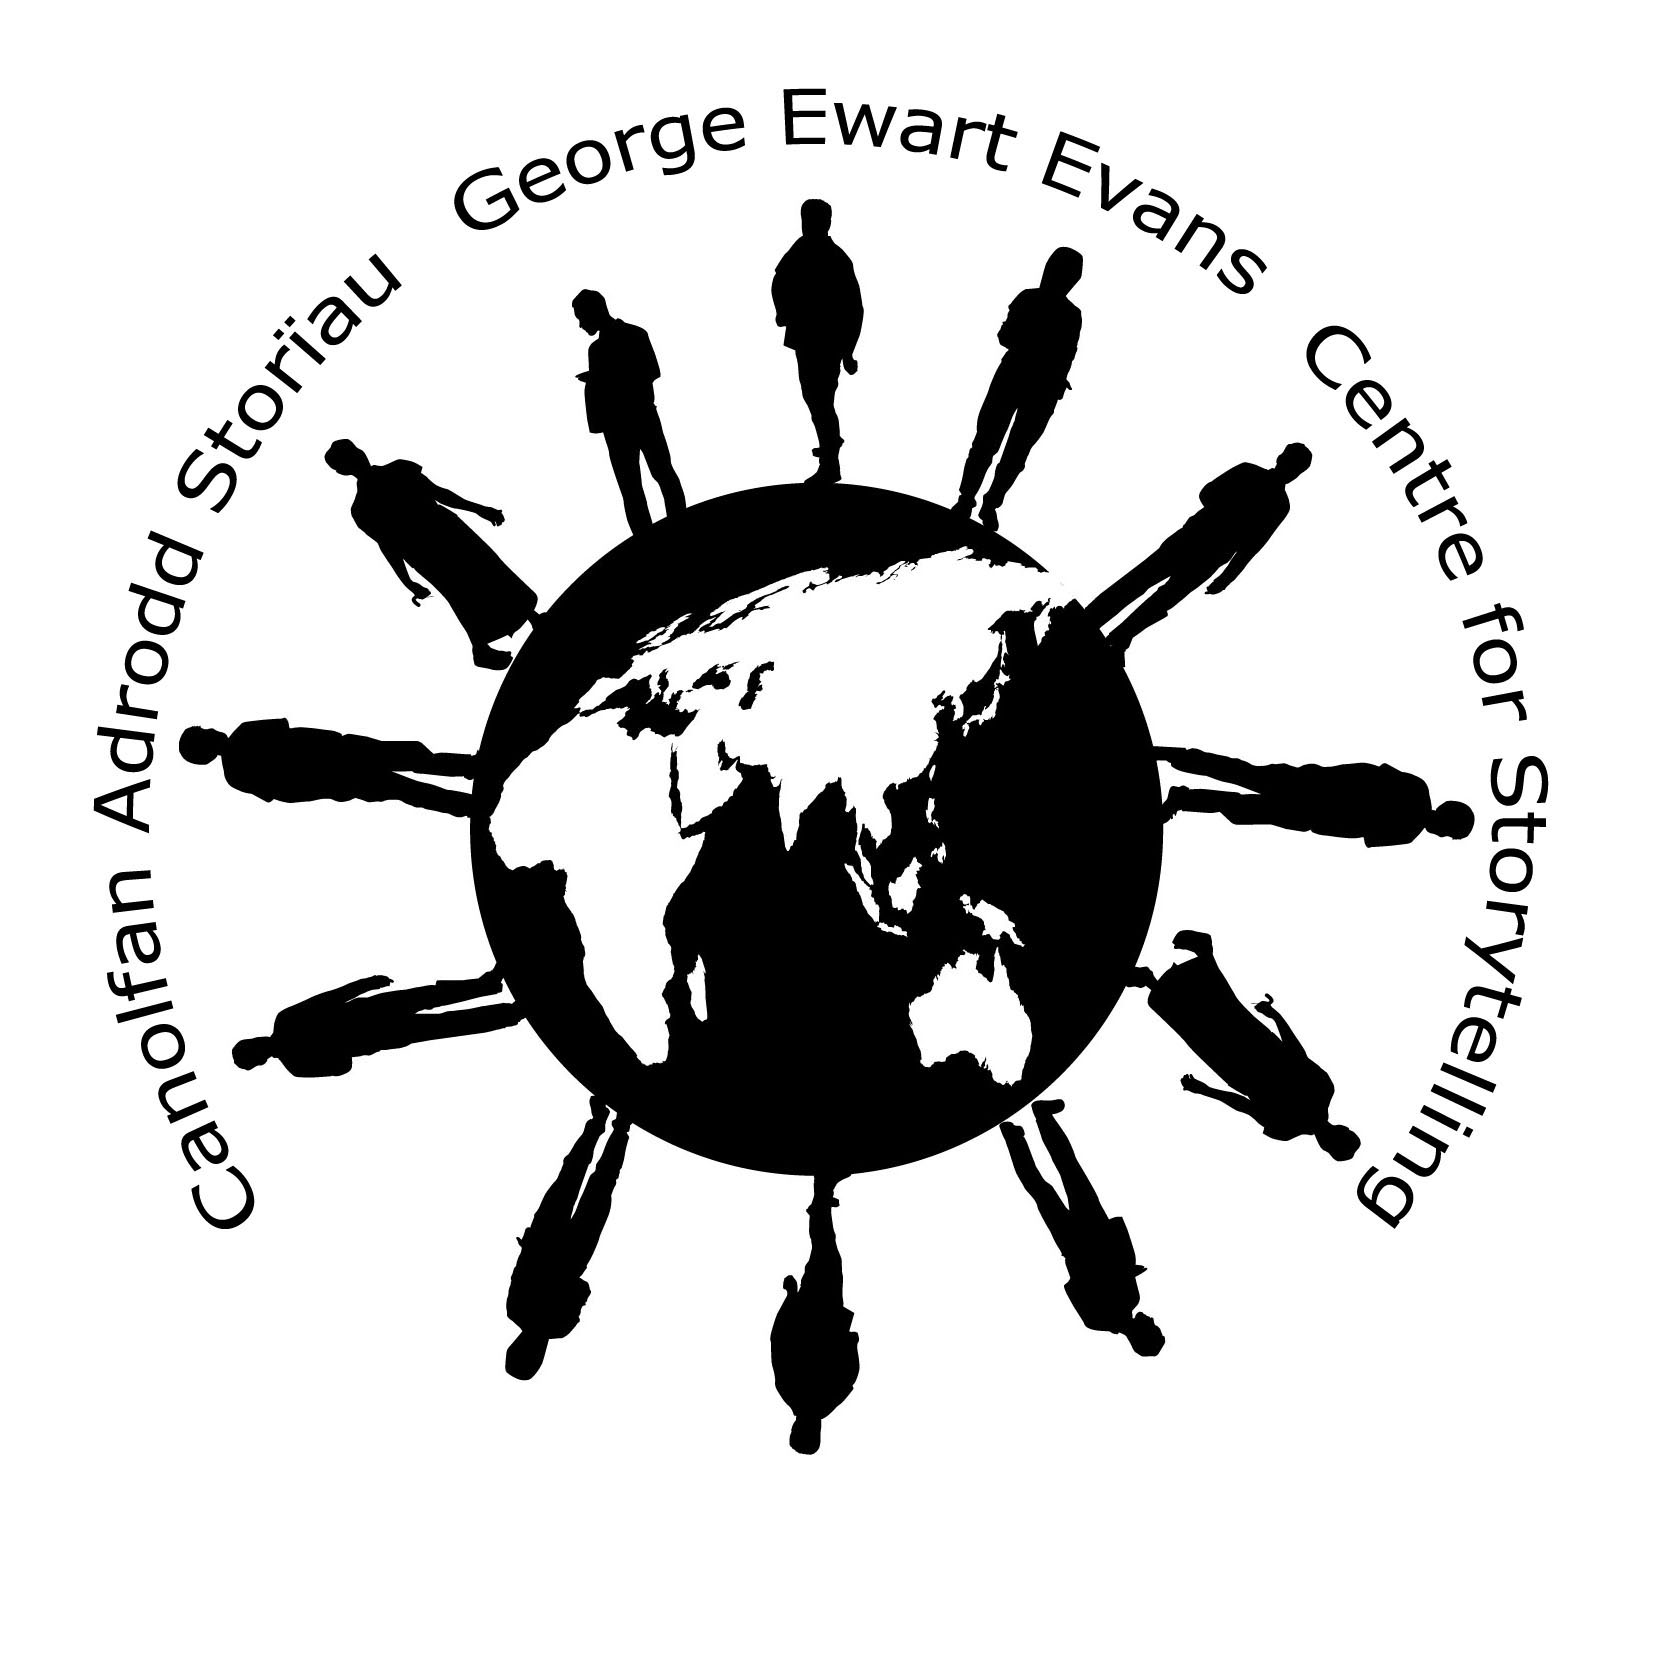 Human figures encircling black and white globe